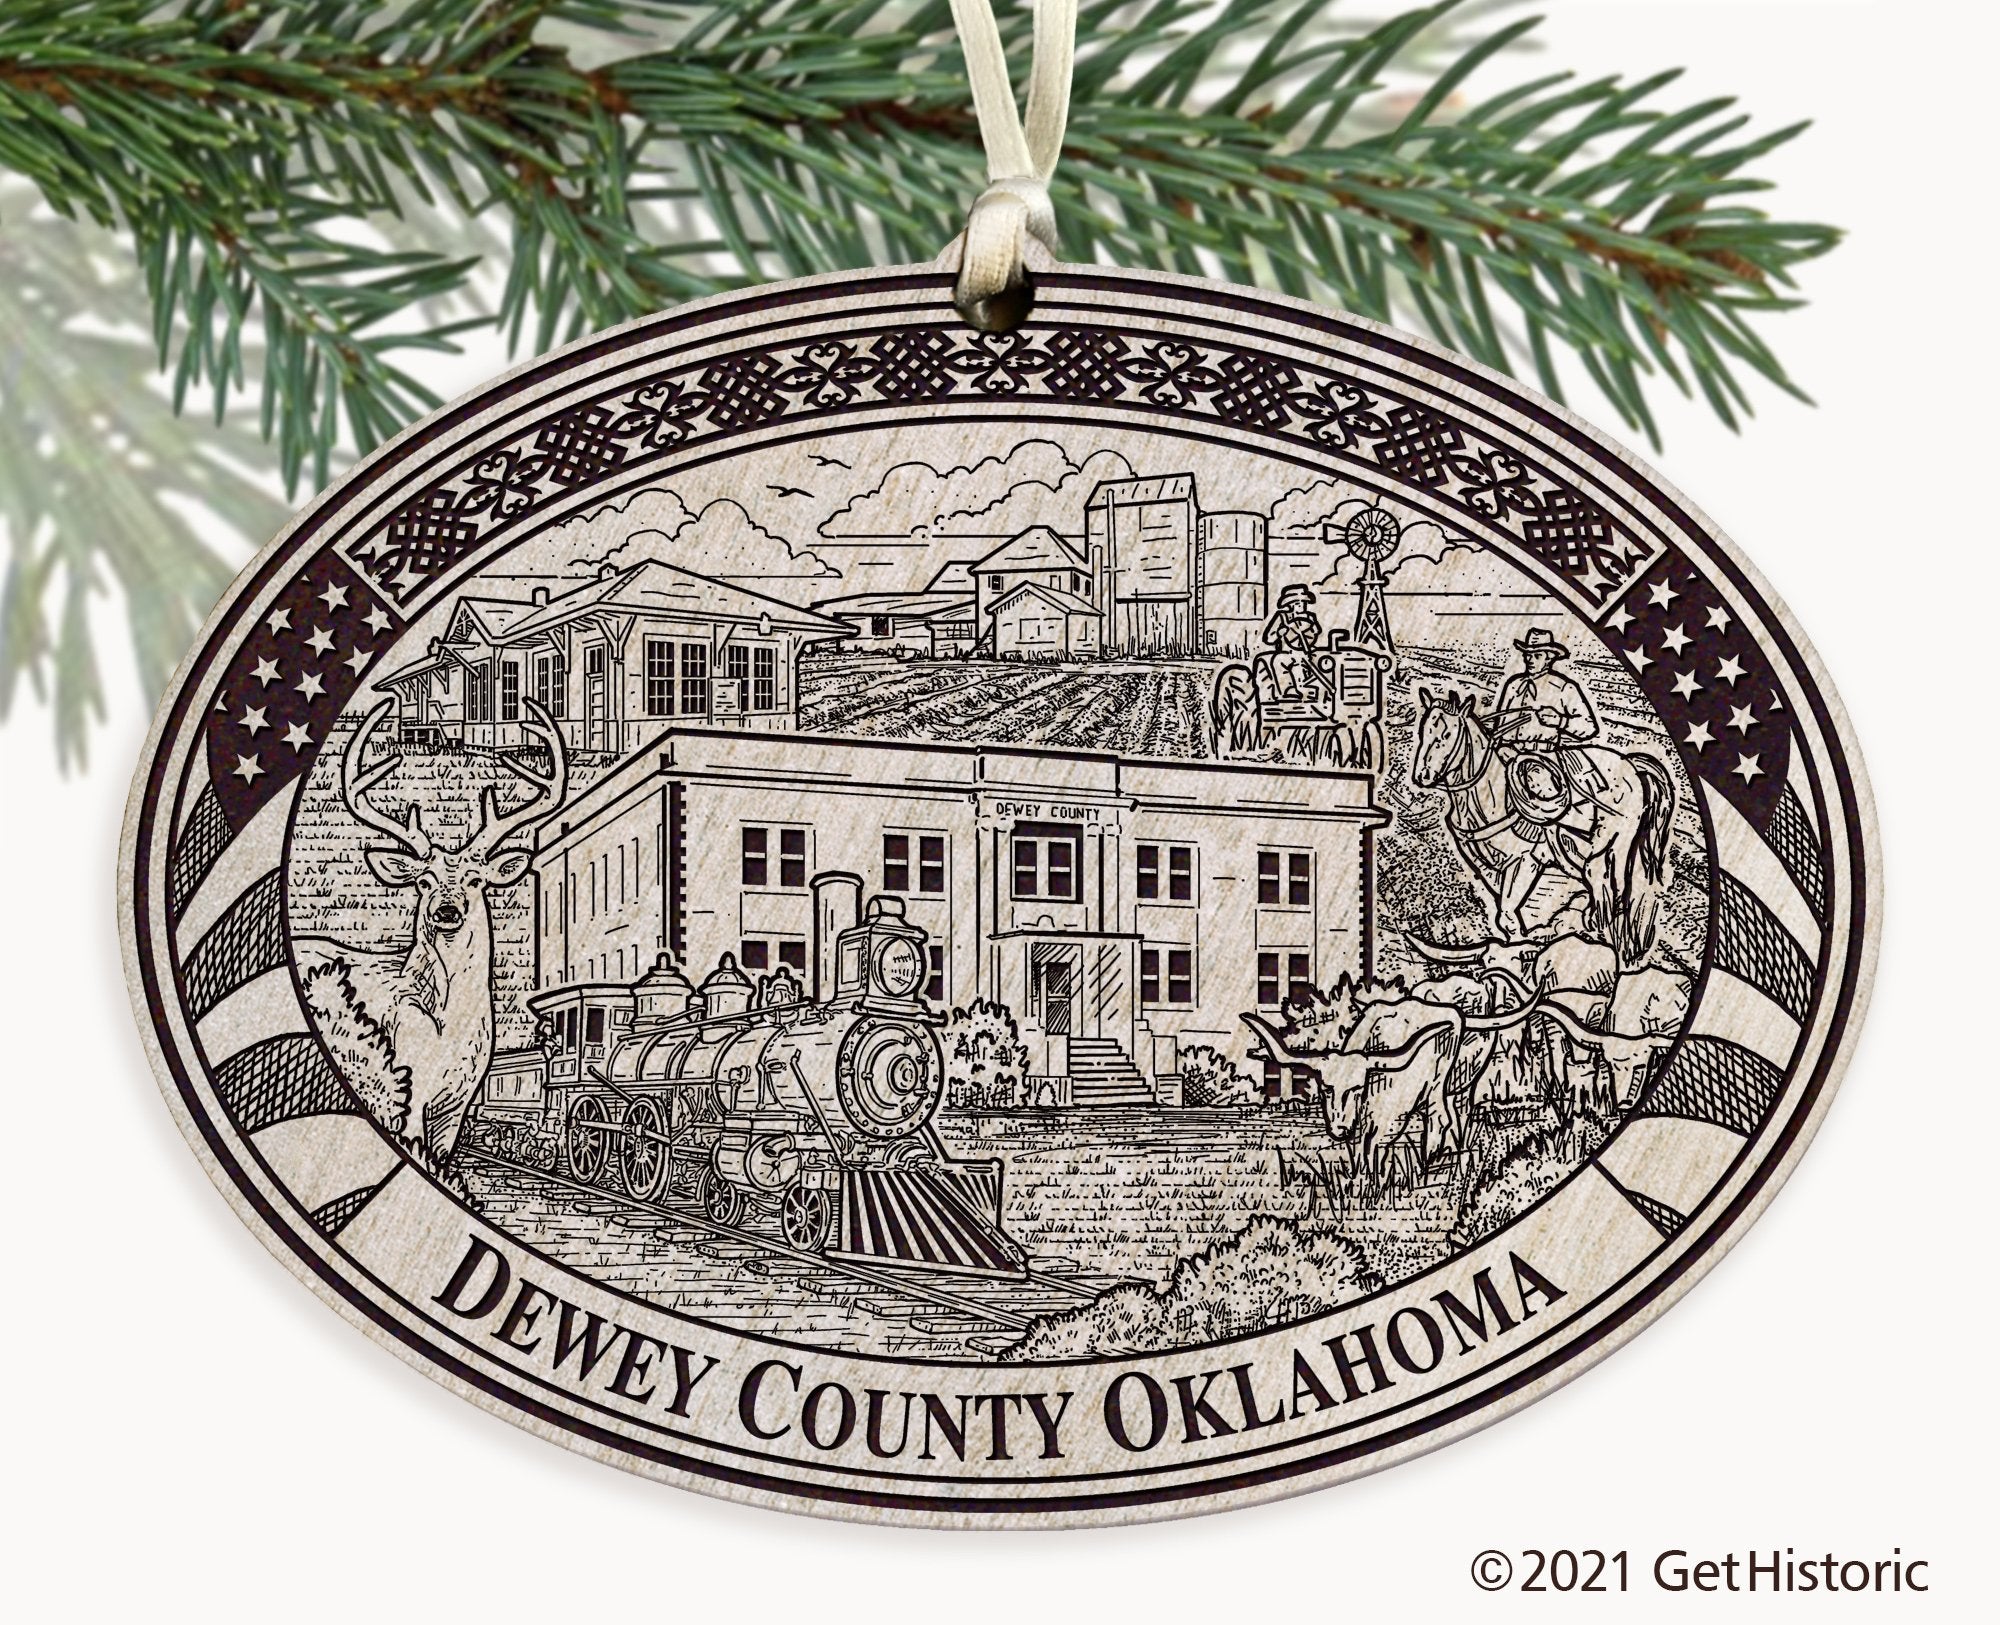 Dewey County Oklahoma Engraved Ornament